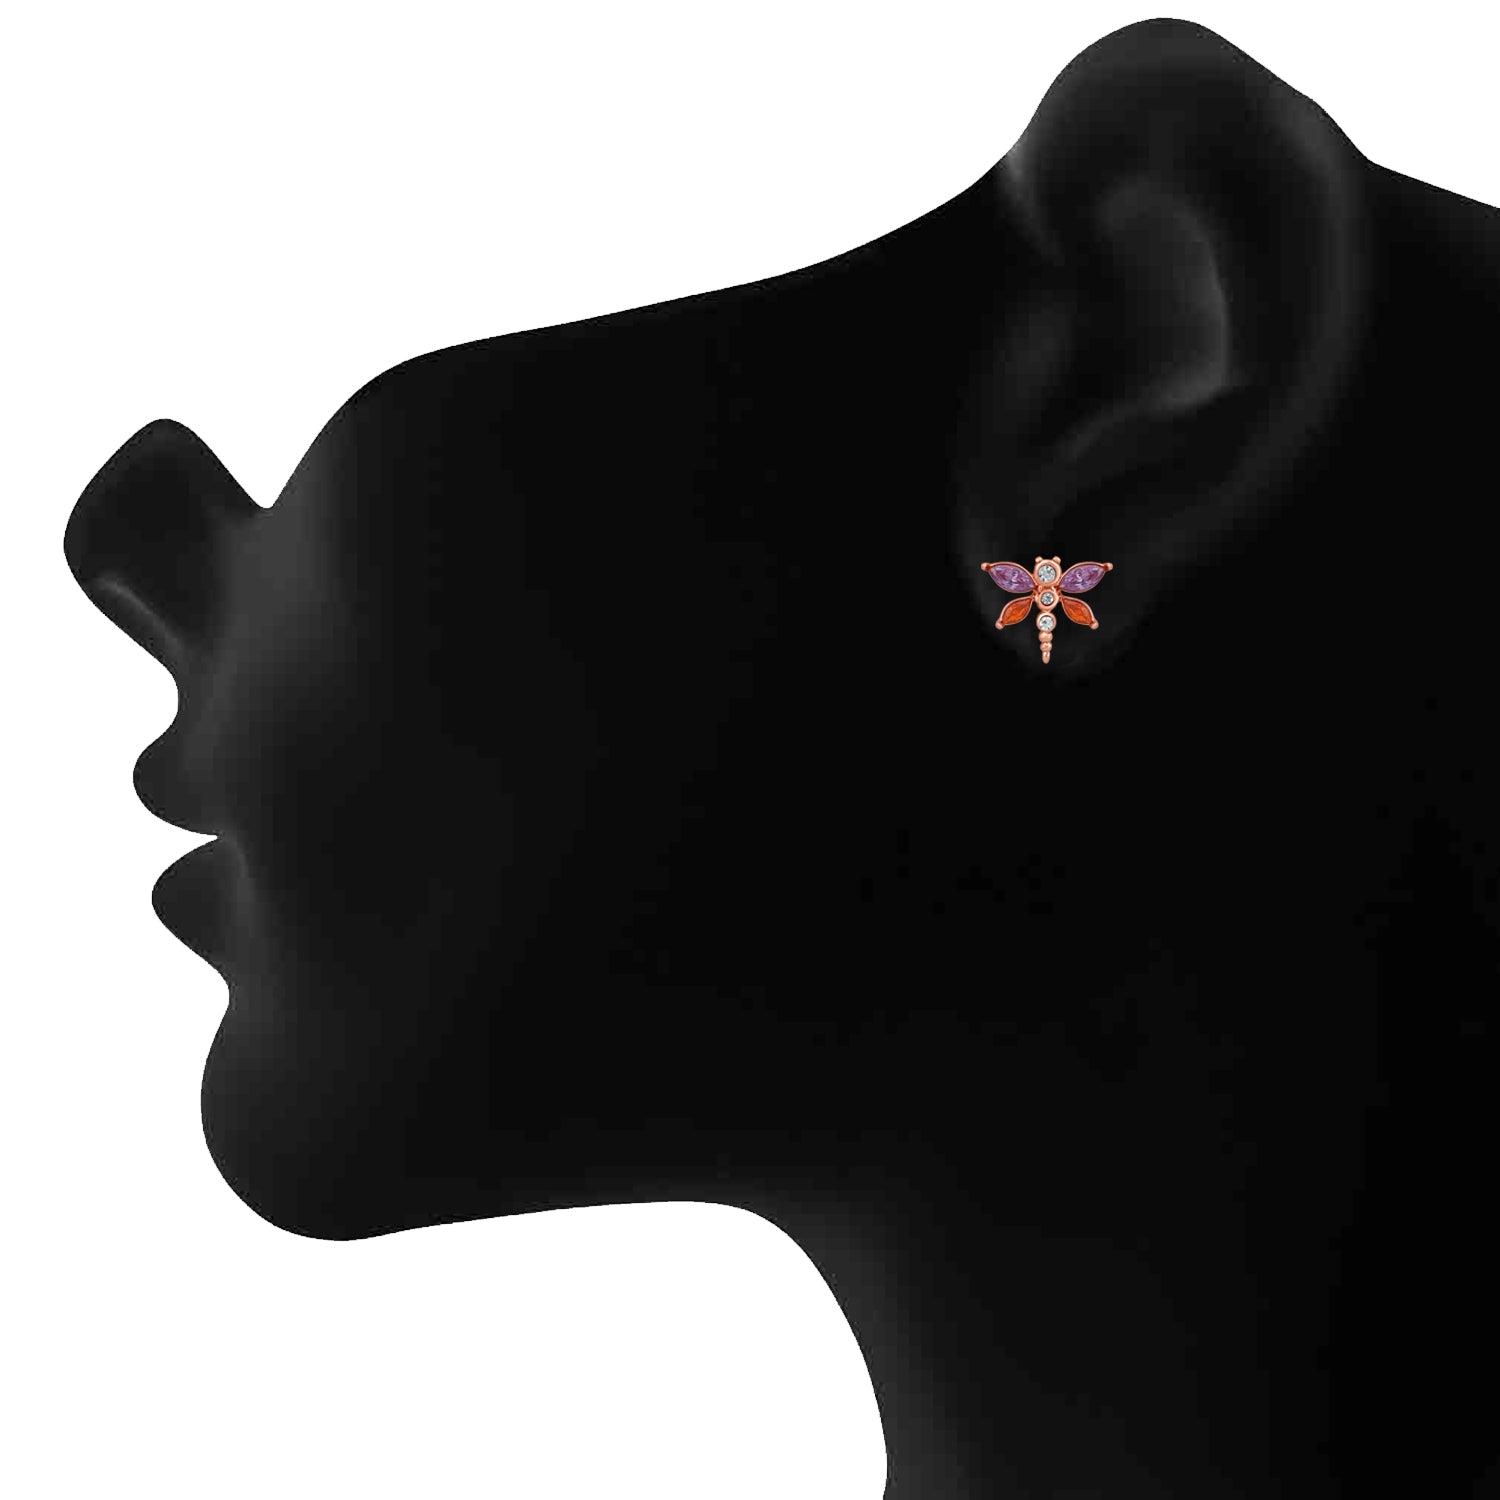 Butterfly inspired multicolour Cubic Zirconia Stud Earrings